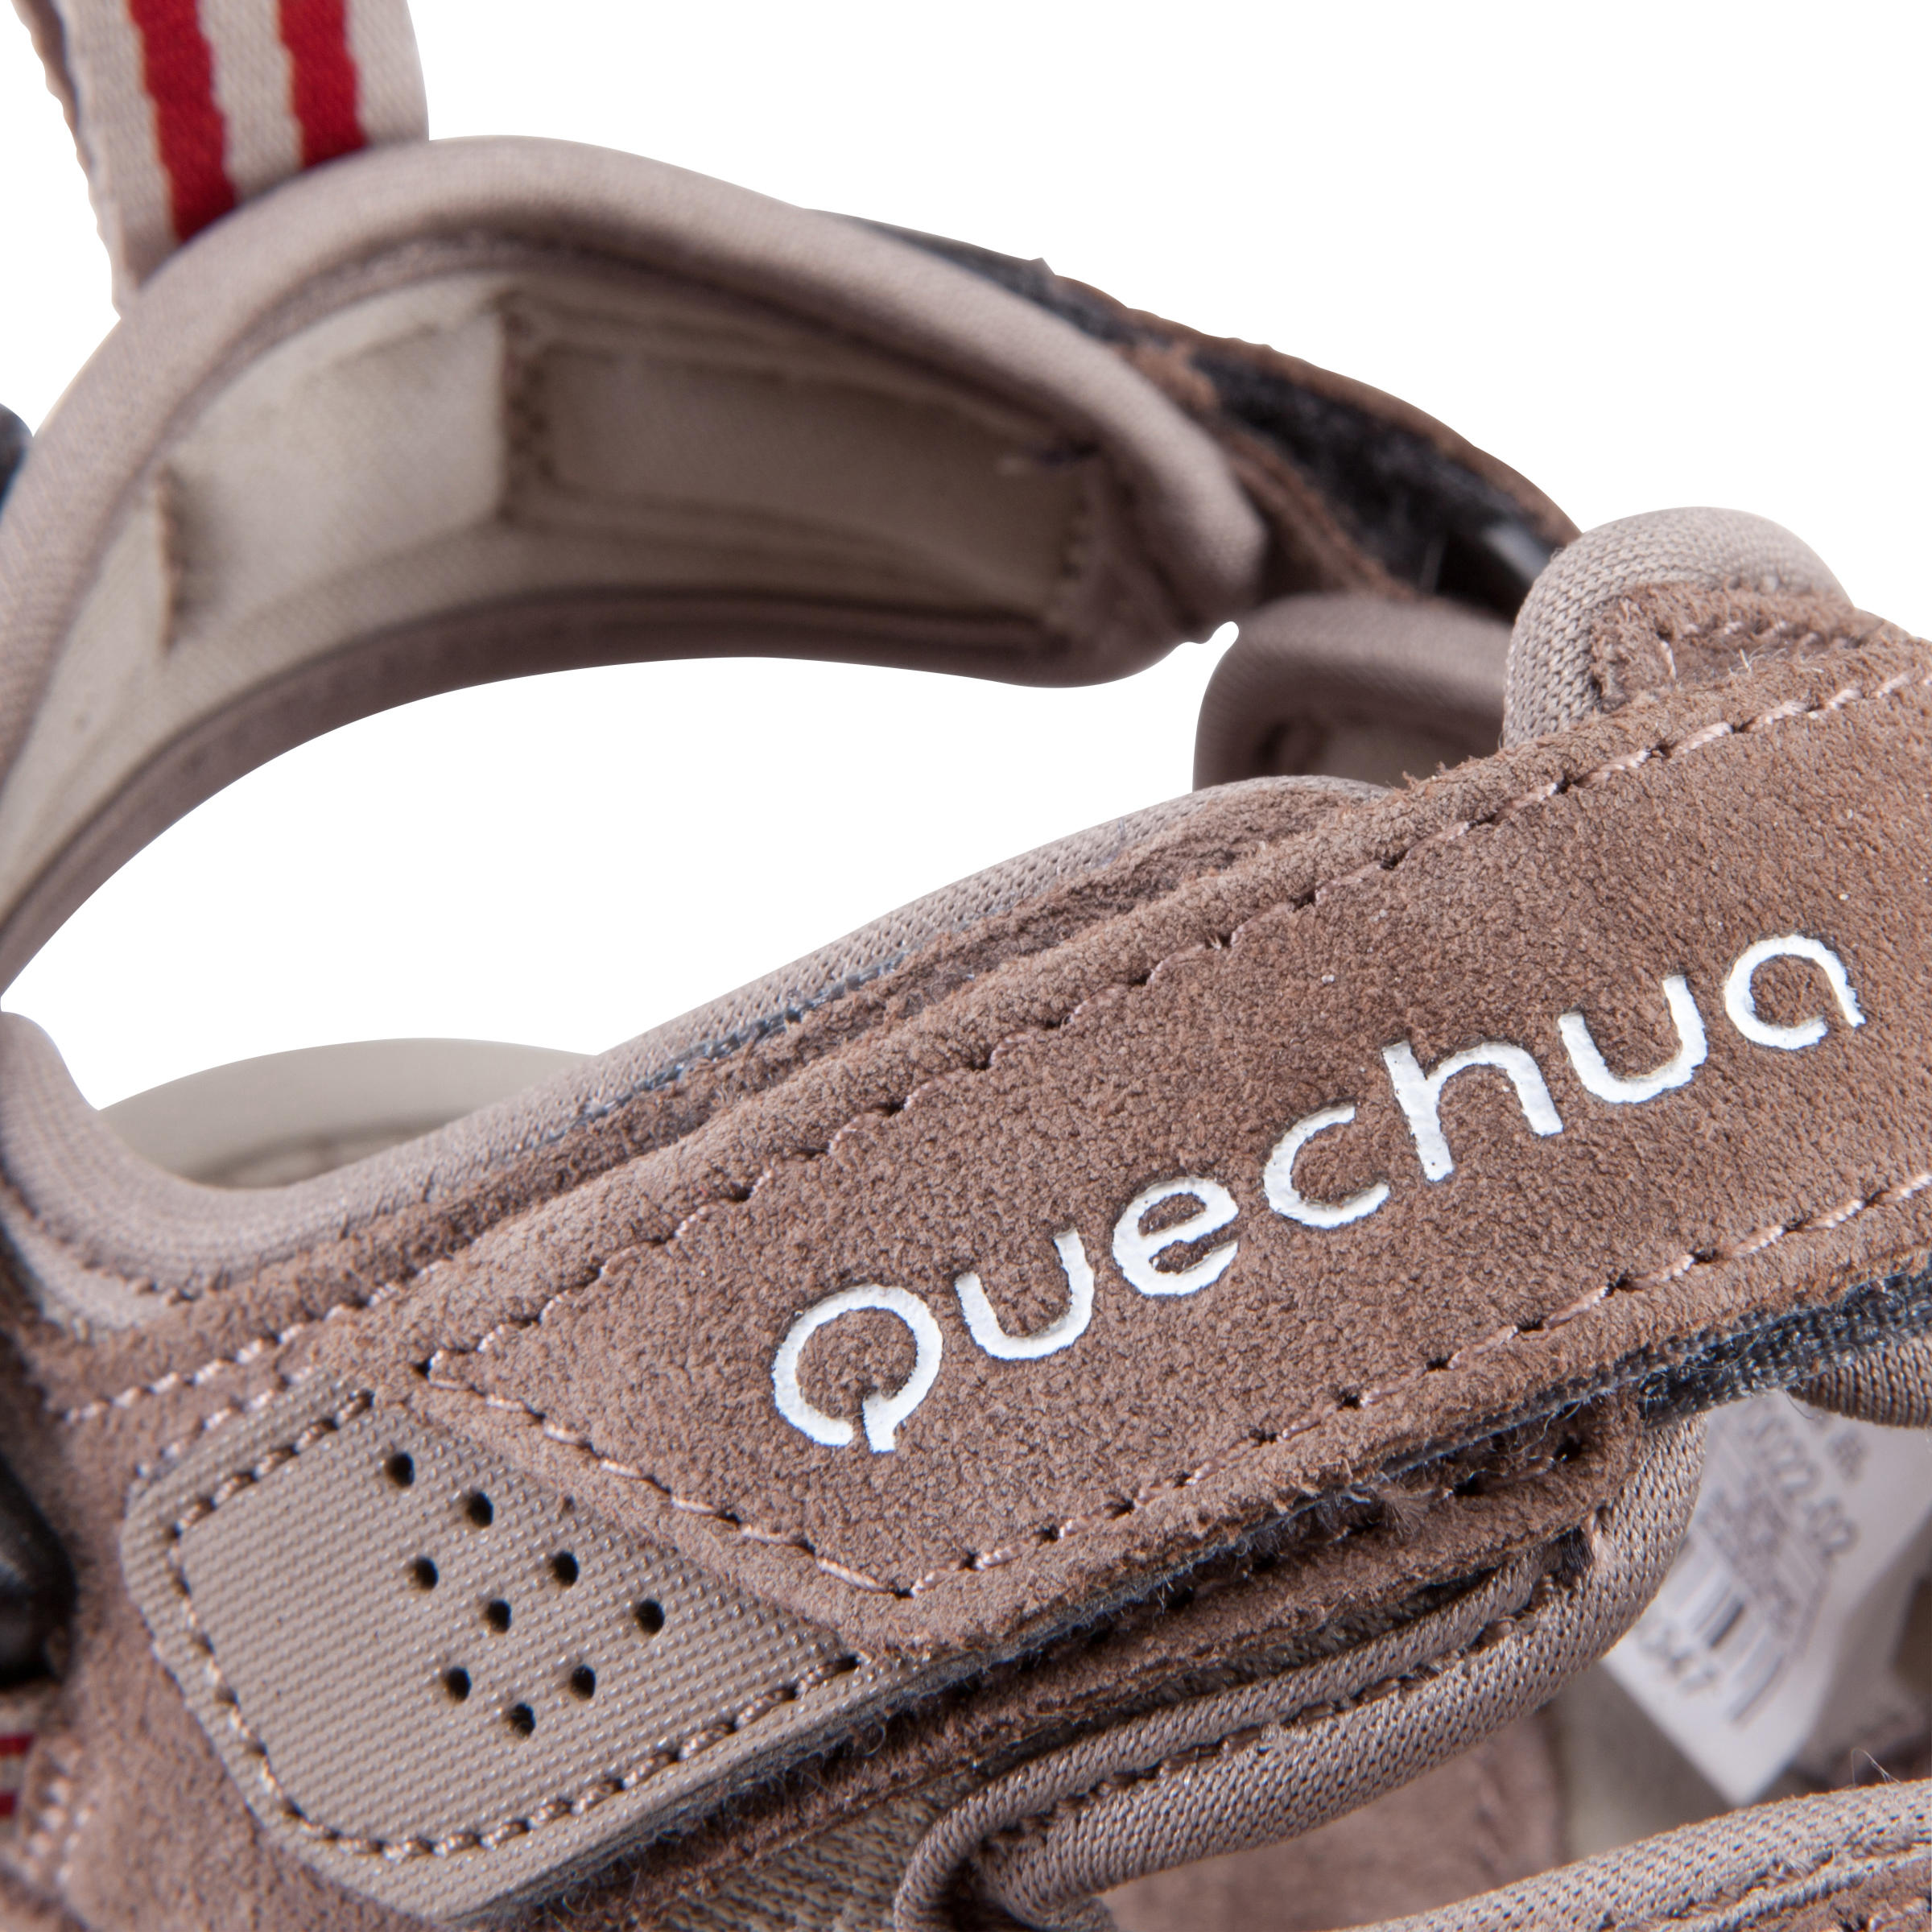 quechua arpenaz 200 sandals